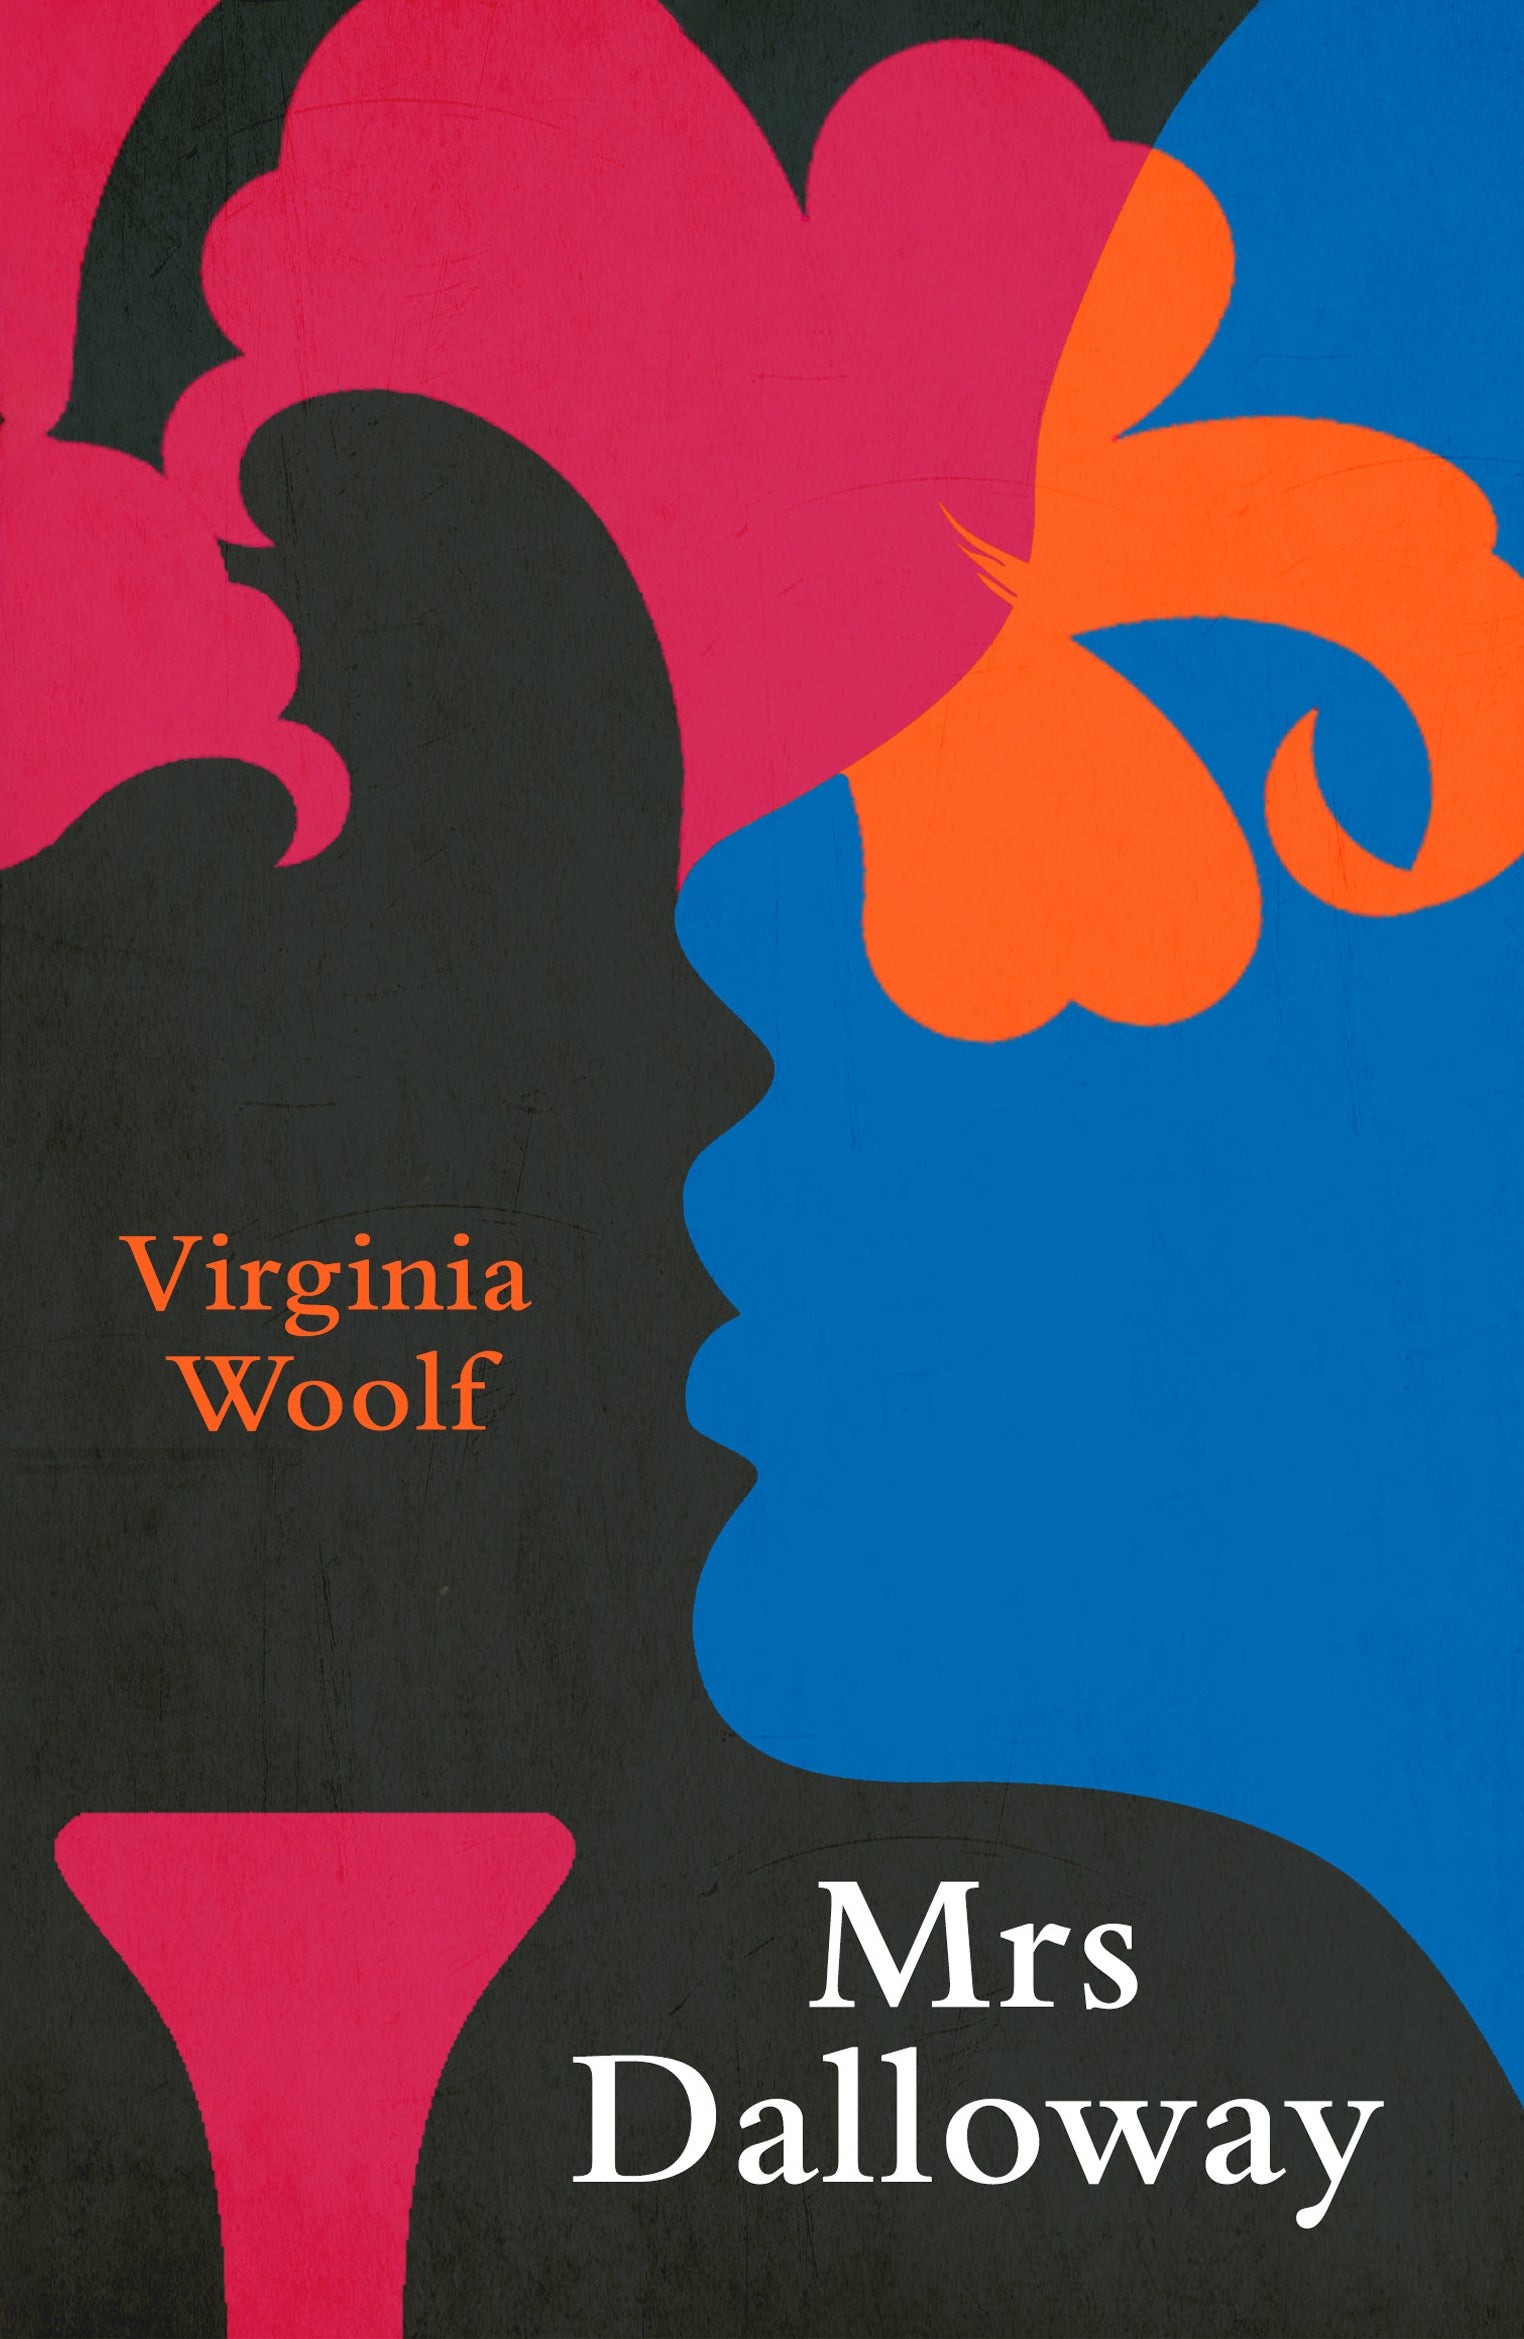 Virginia Woolf's living book - New Statesman